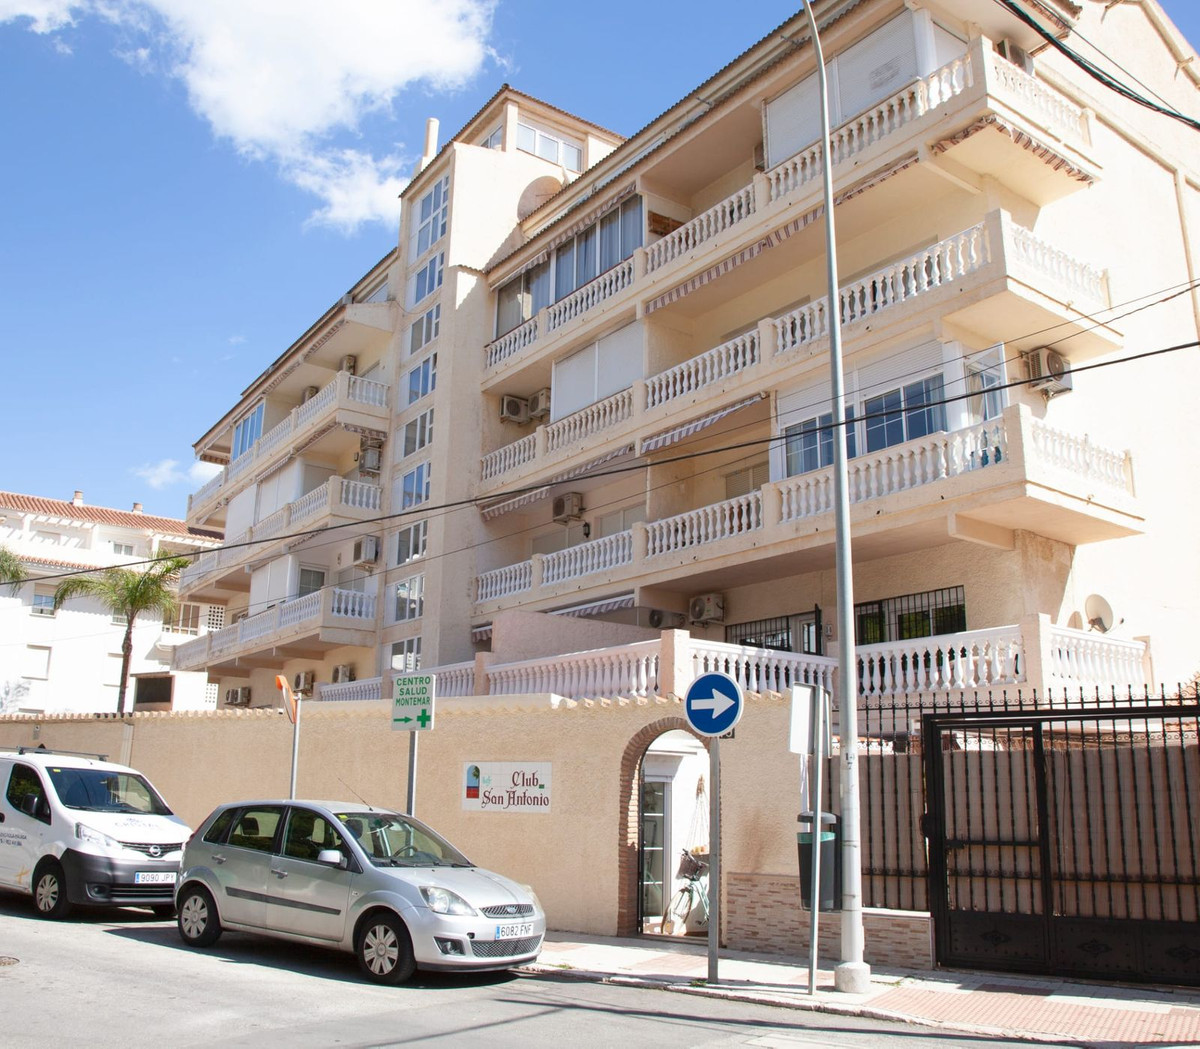 						Apartment  Ground Floor
													for sale 
																			 in Torremolinos
					